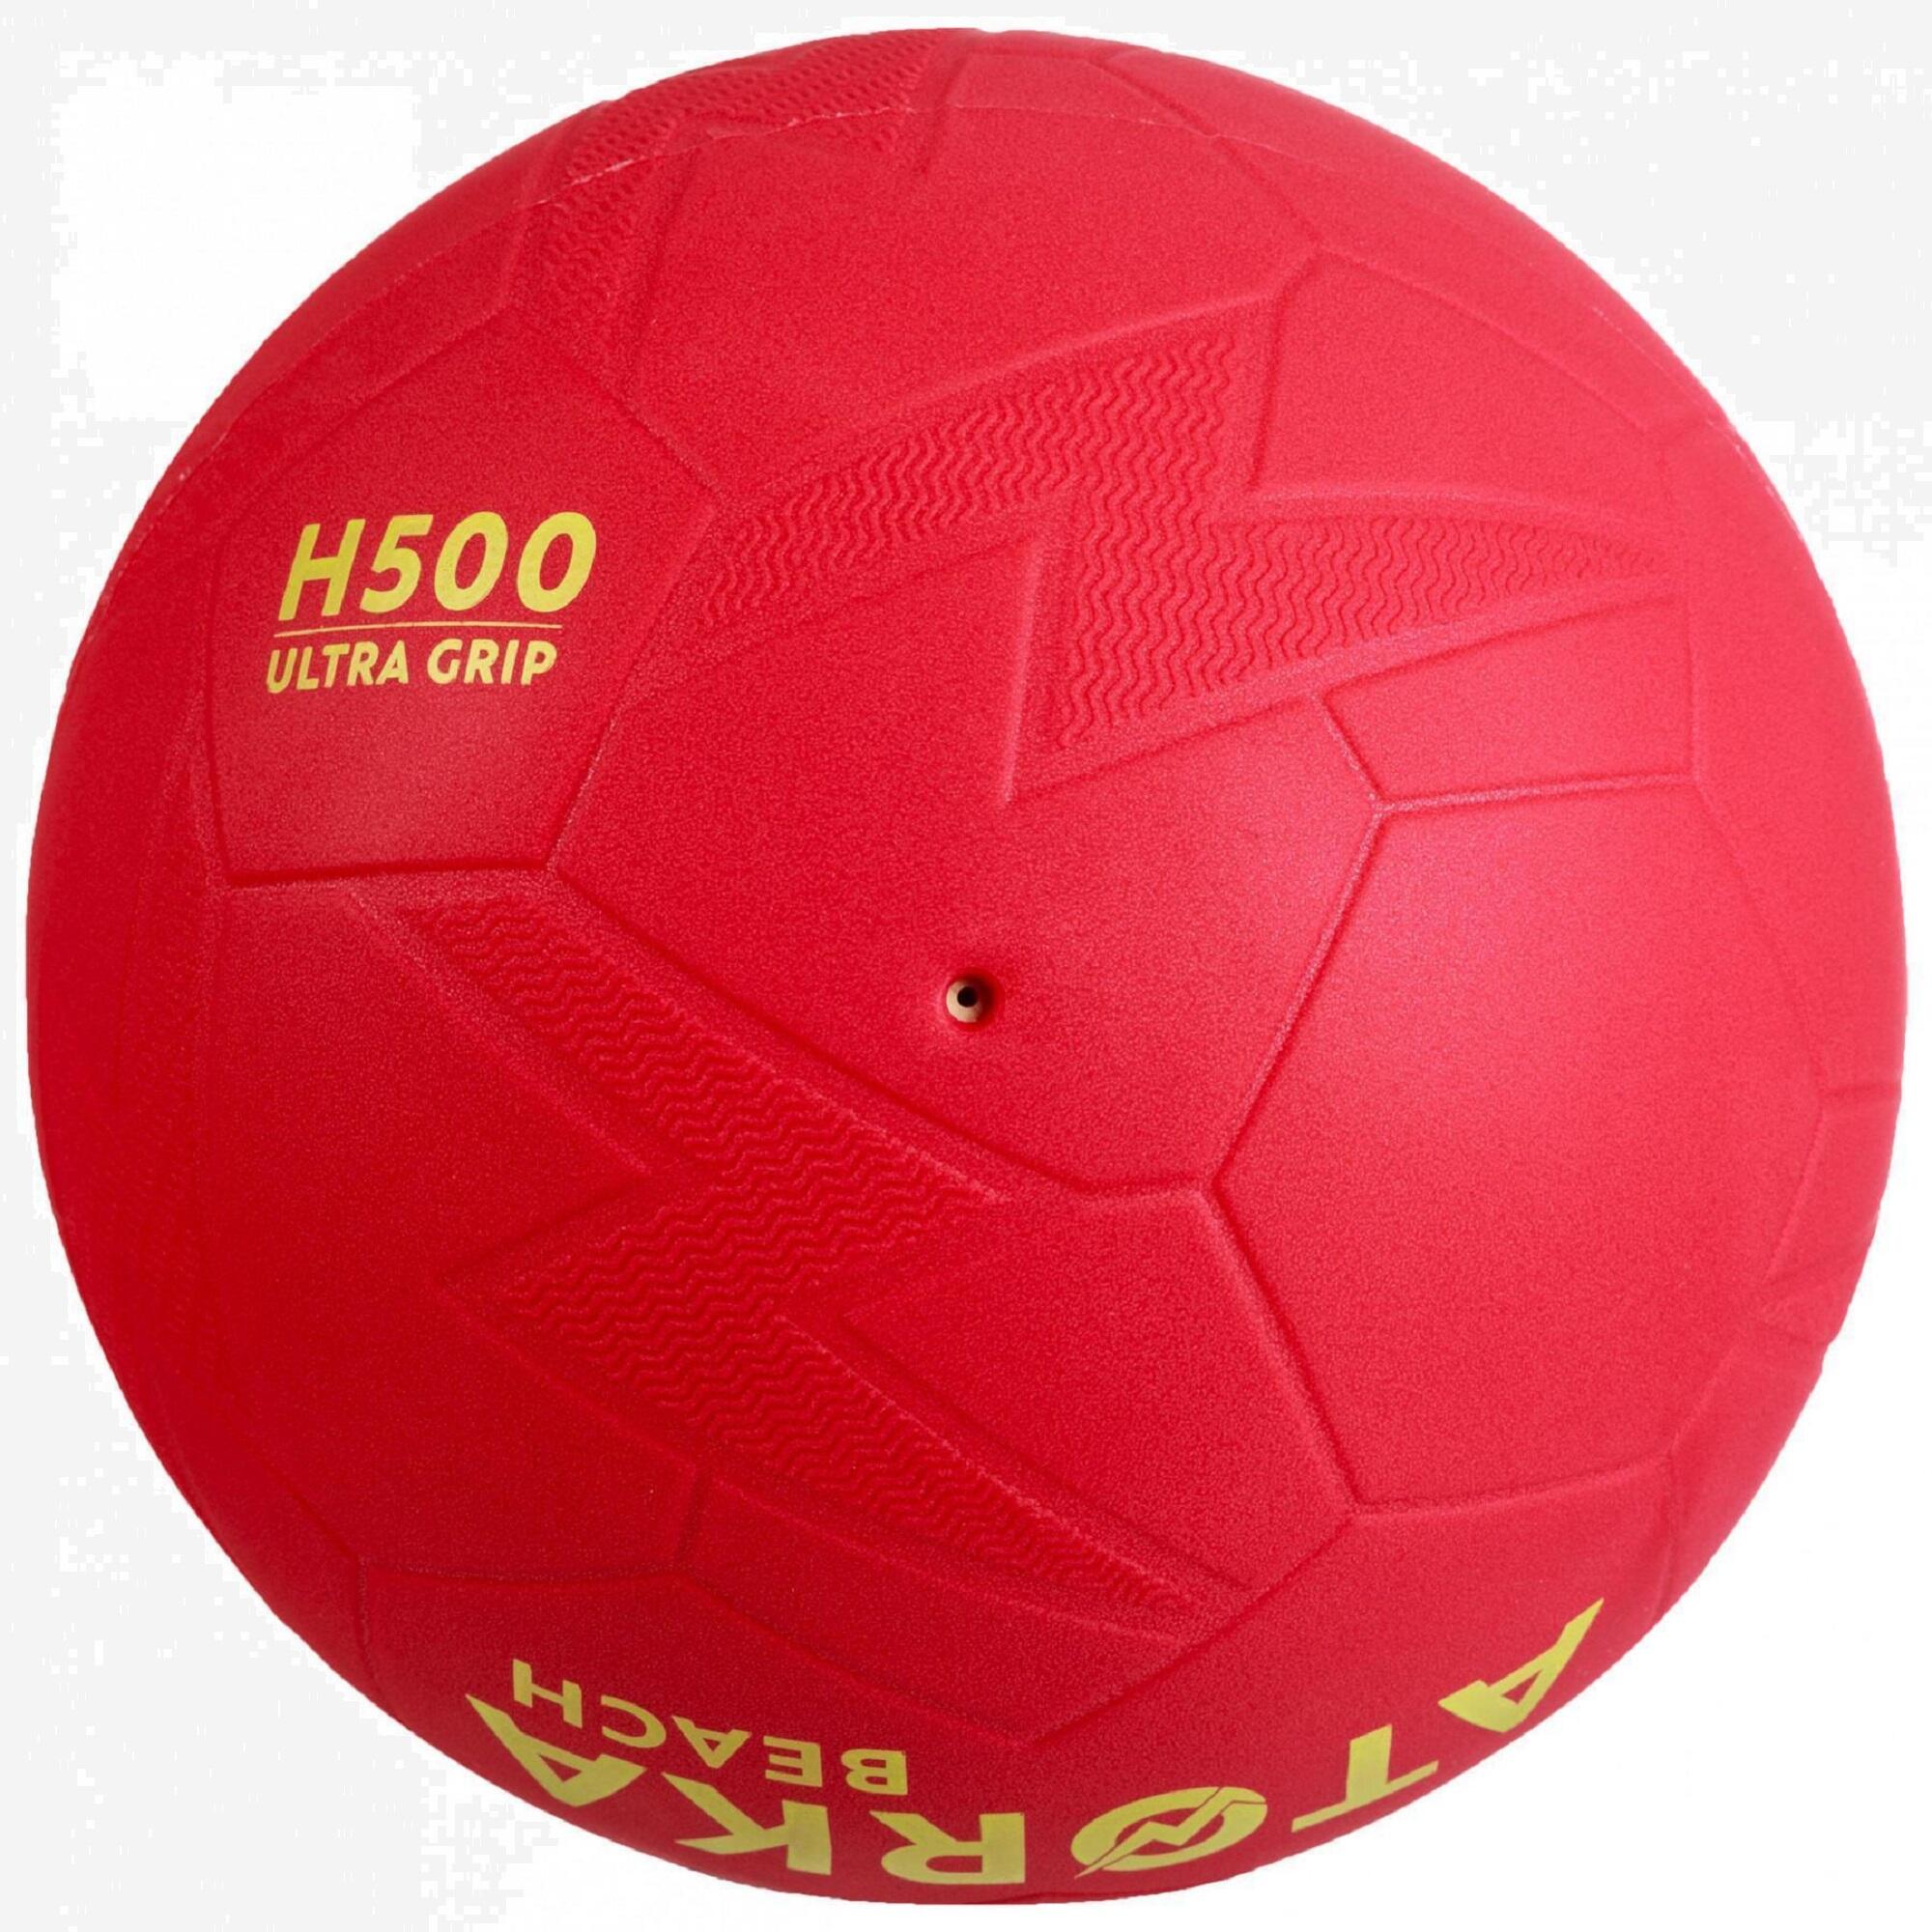 HB500B Size 2 Beach Handball - Red 3/4